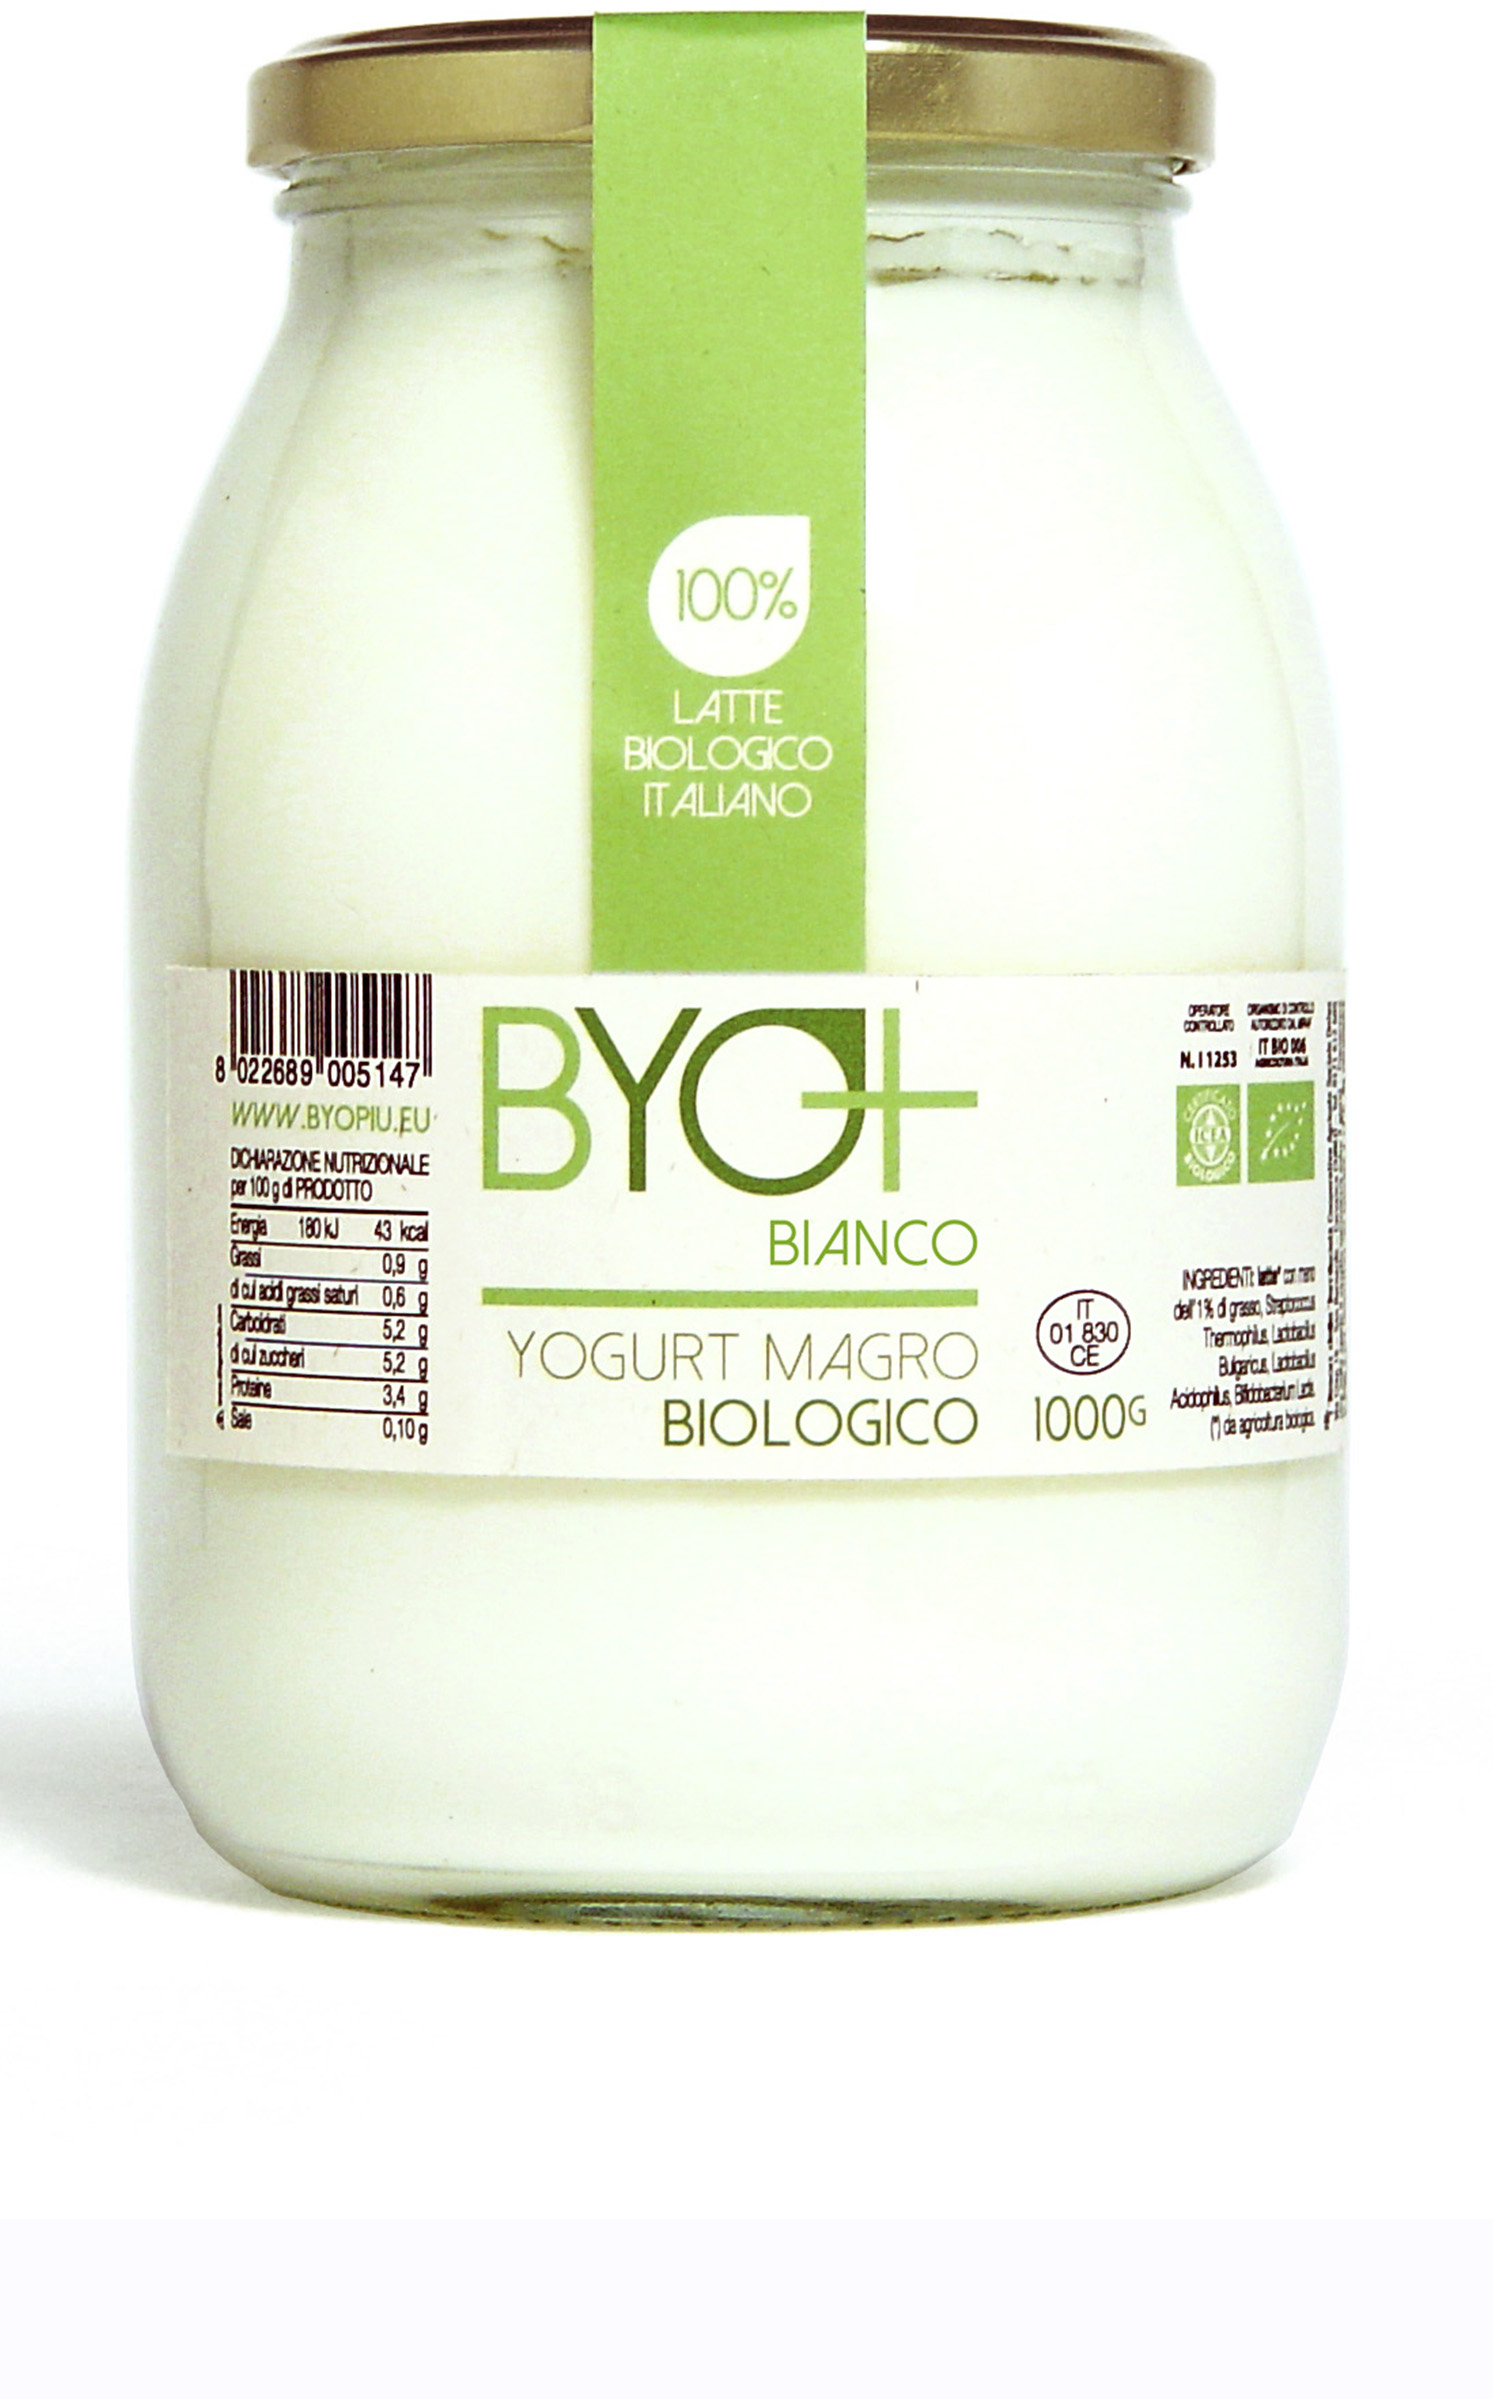 ByoPiu_yogurt magro biologico 1000g-bianco